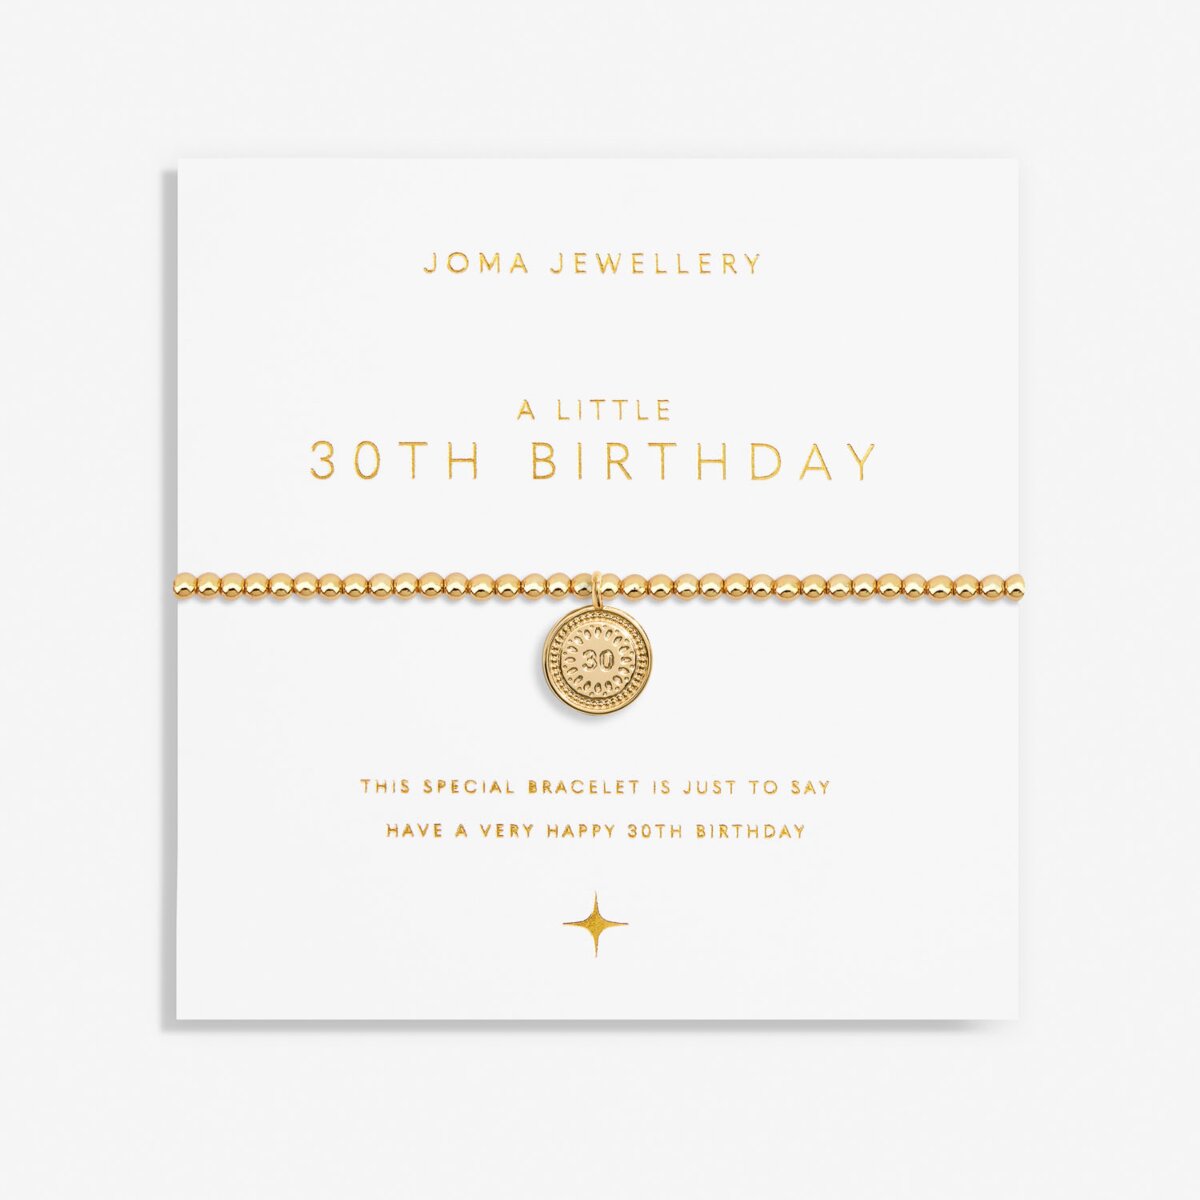 JOMA JEWELLERY | A LITTLE GOLD | 30TH BIRTHDAY BRACELET